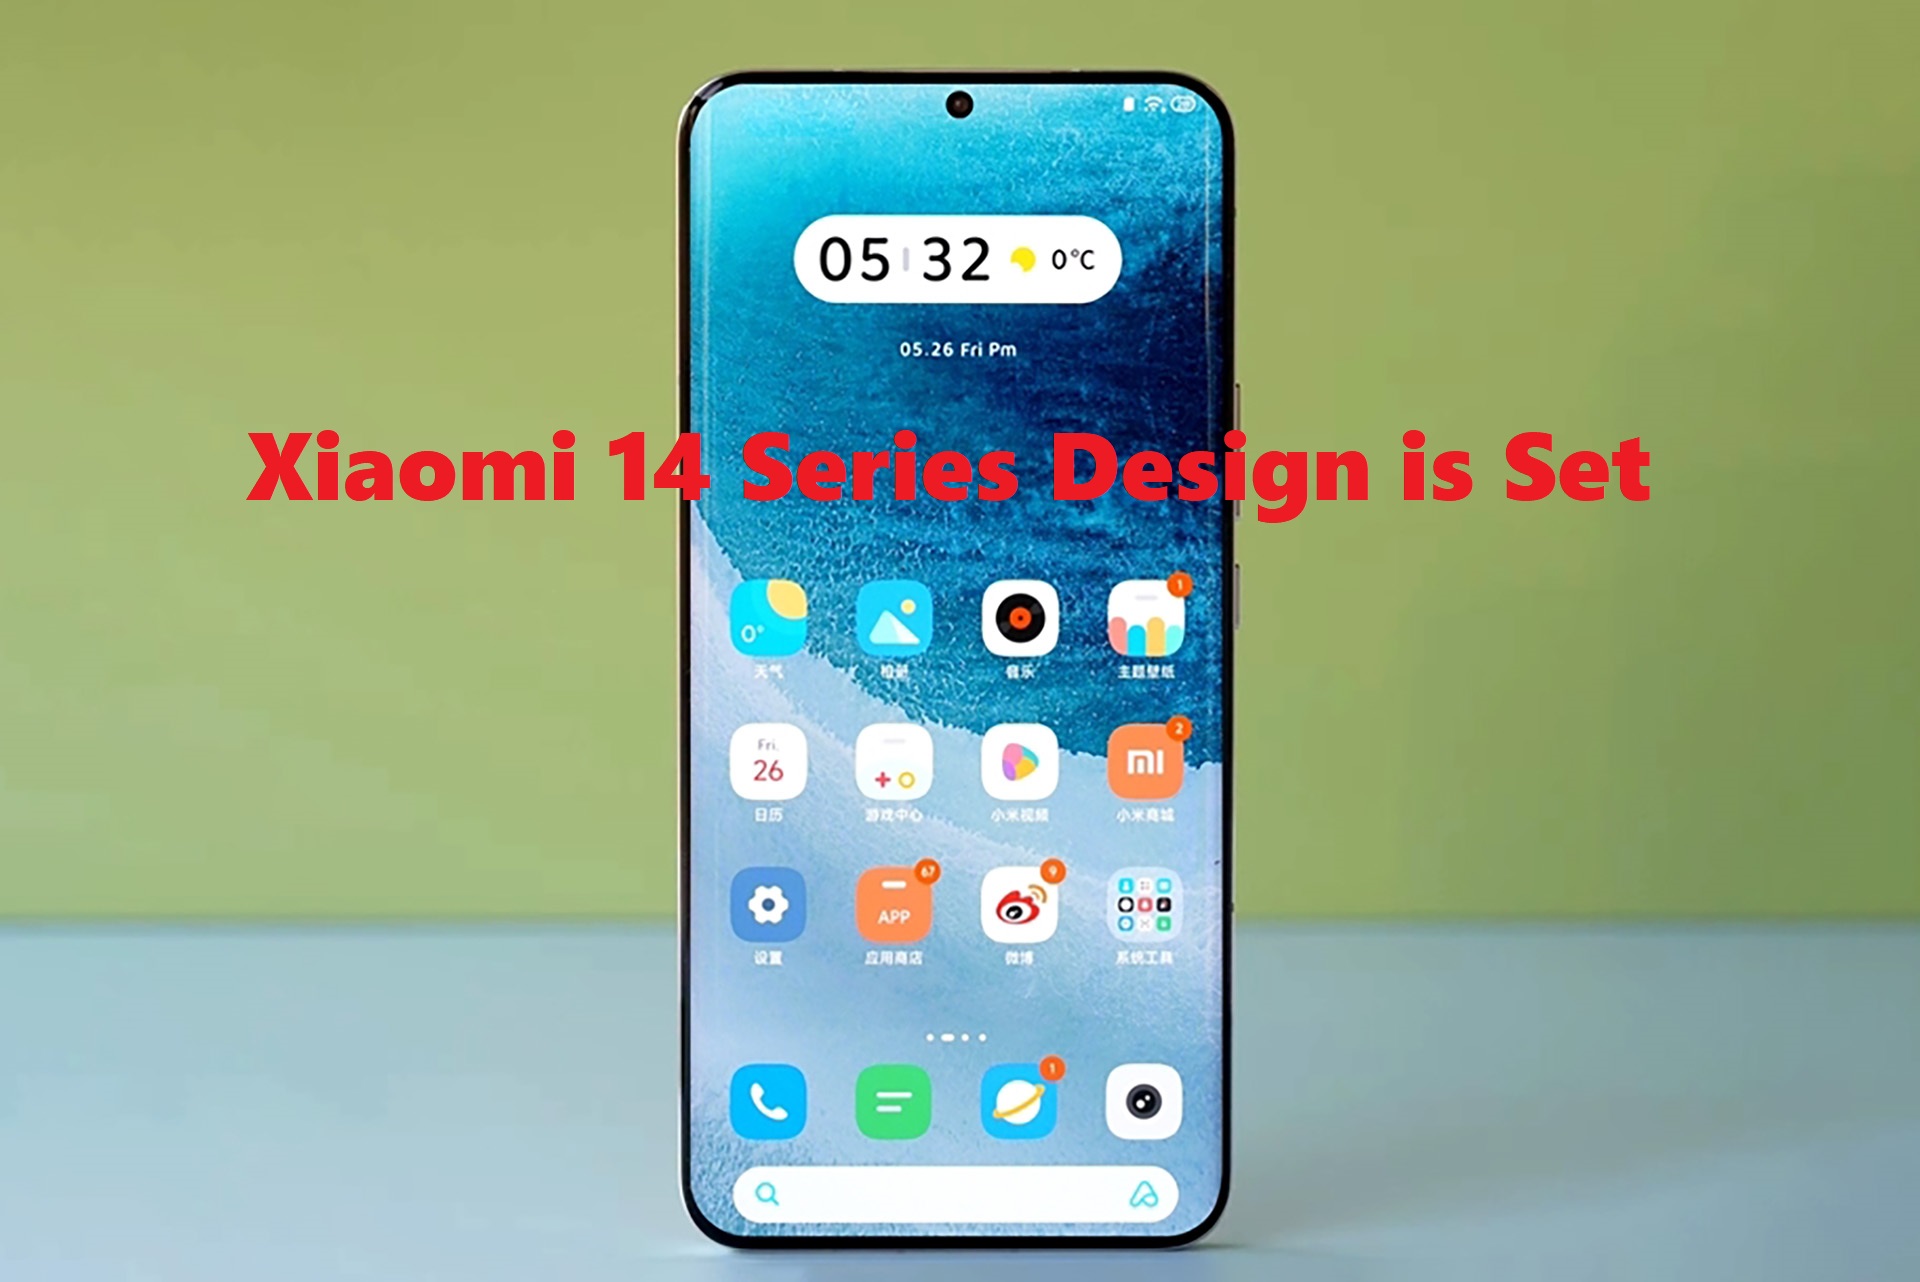 Xiaomi 14 Series Design is Set